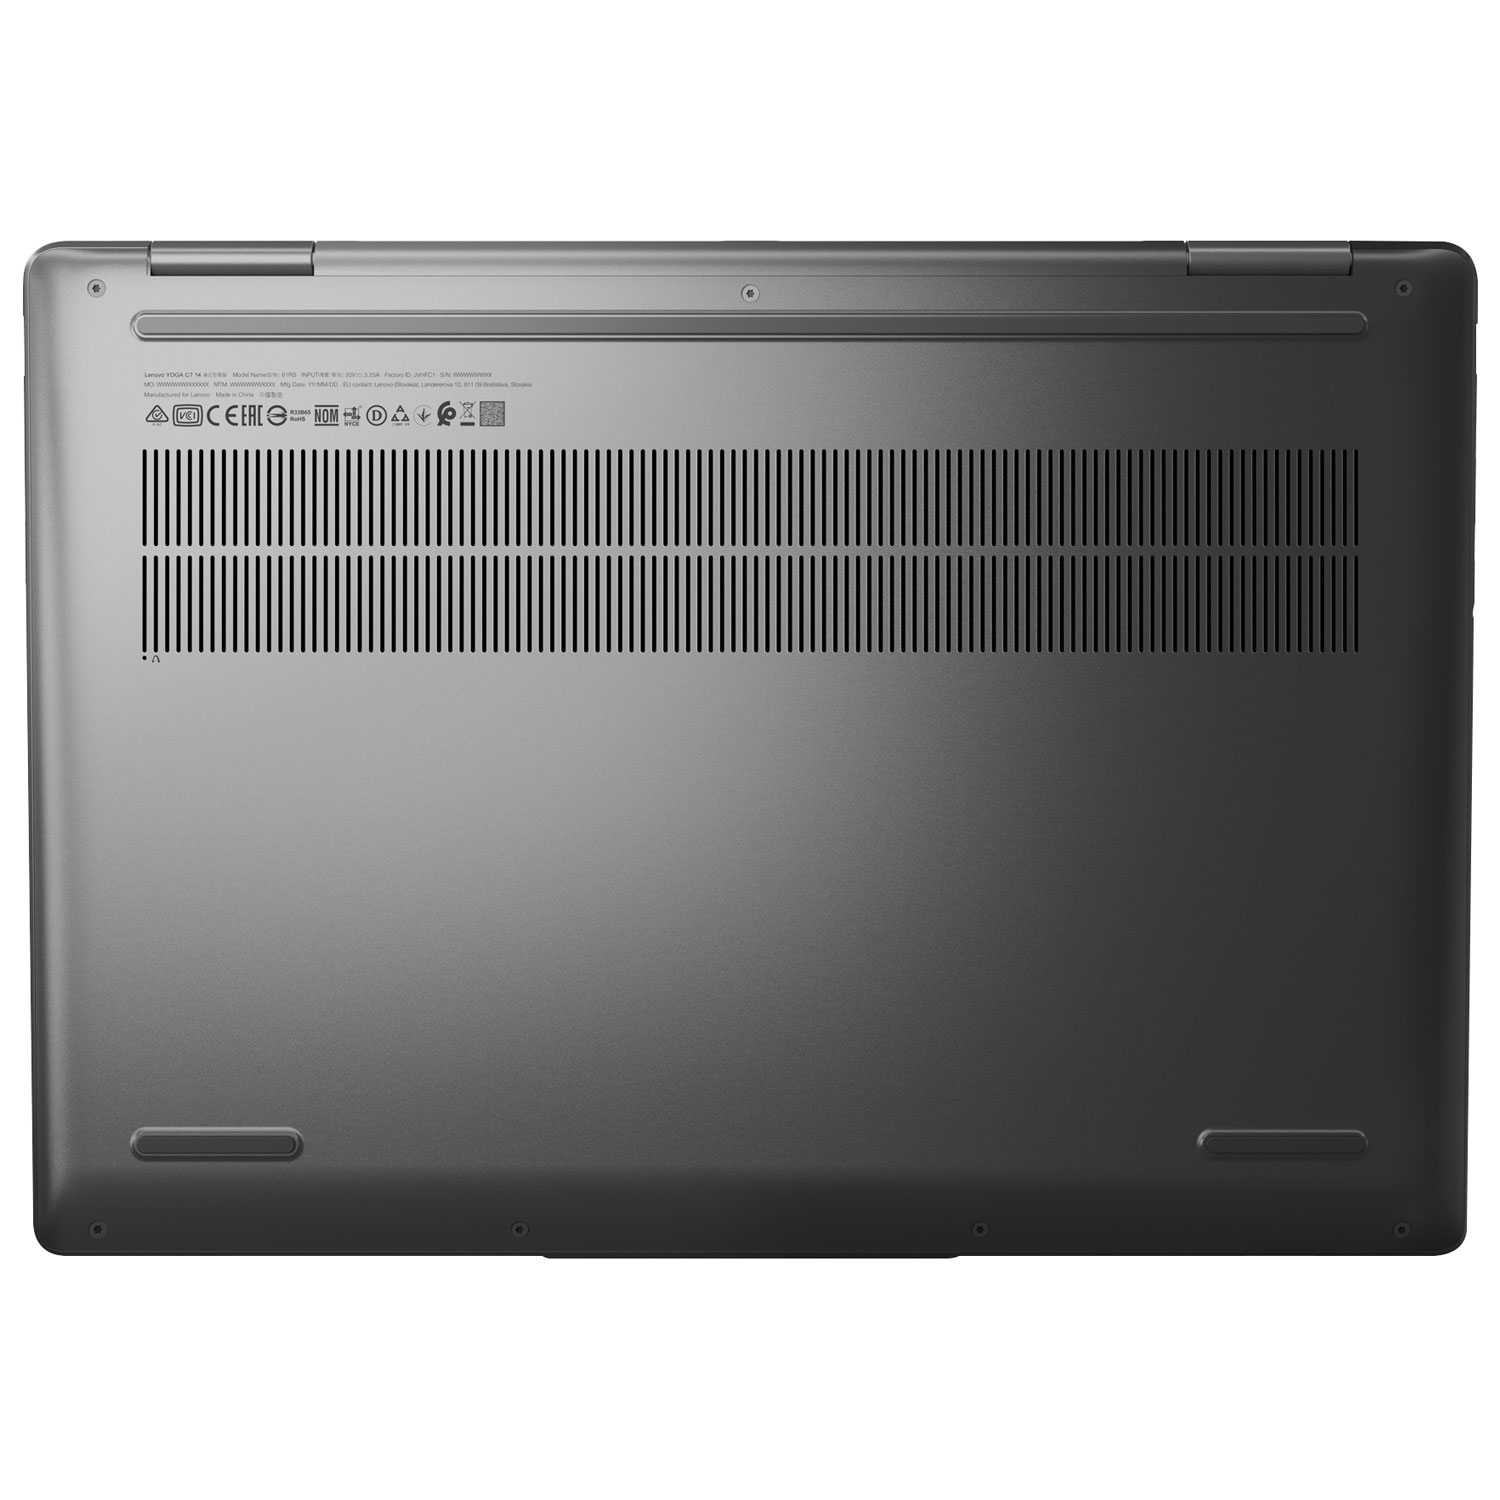 Lenovo Yoga 7i 14 Touchscreen 2-in-1 Laptop - Storm Grey (Intel